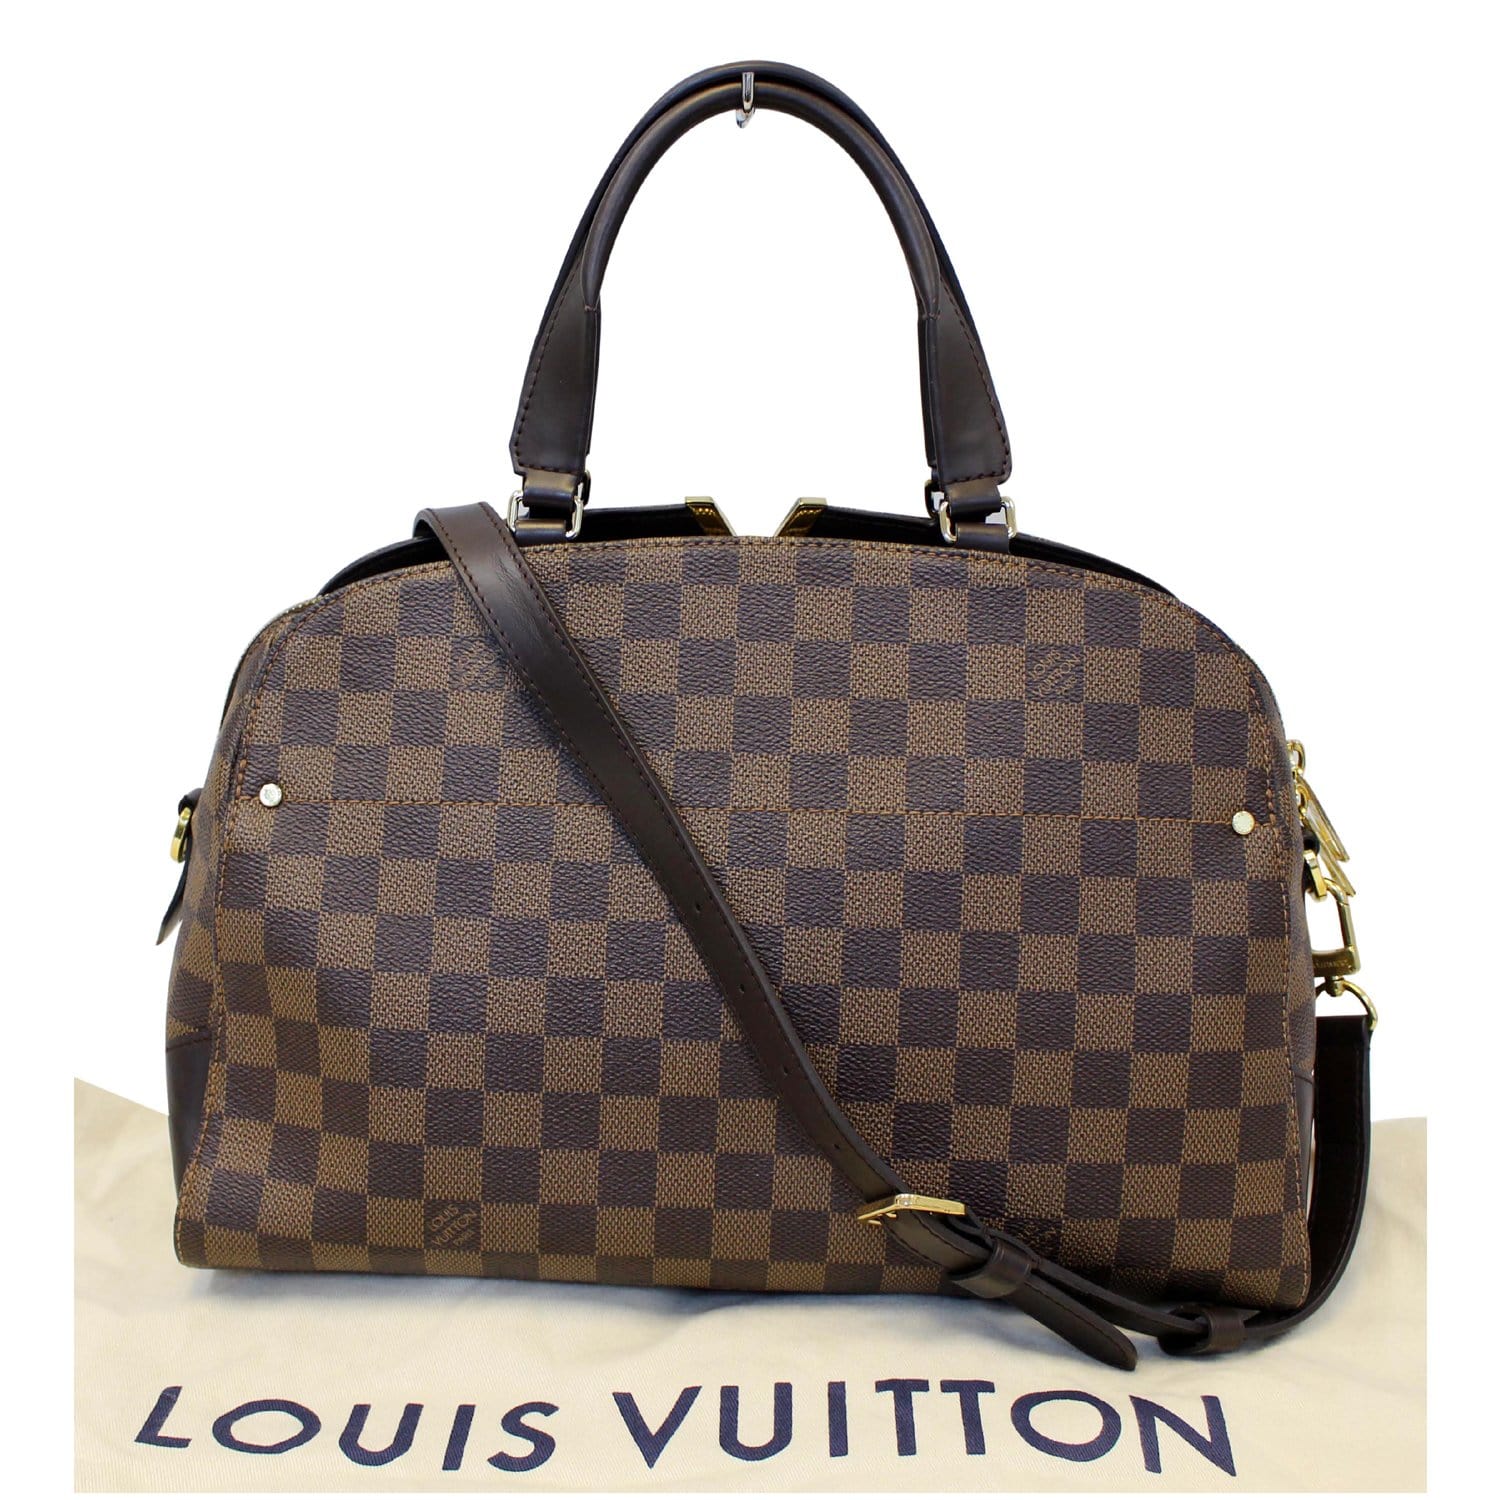 Louis Vuitton Damier Ebene Kensington Bowling Handbag